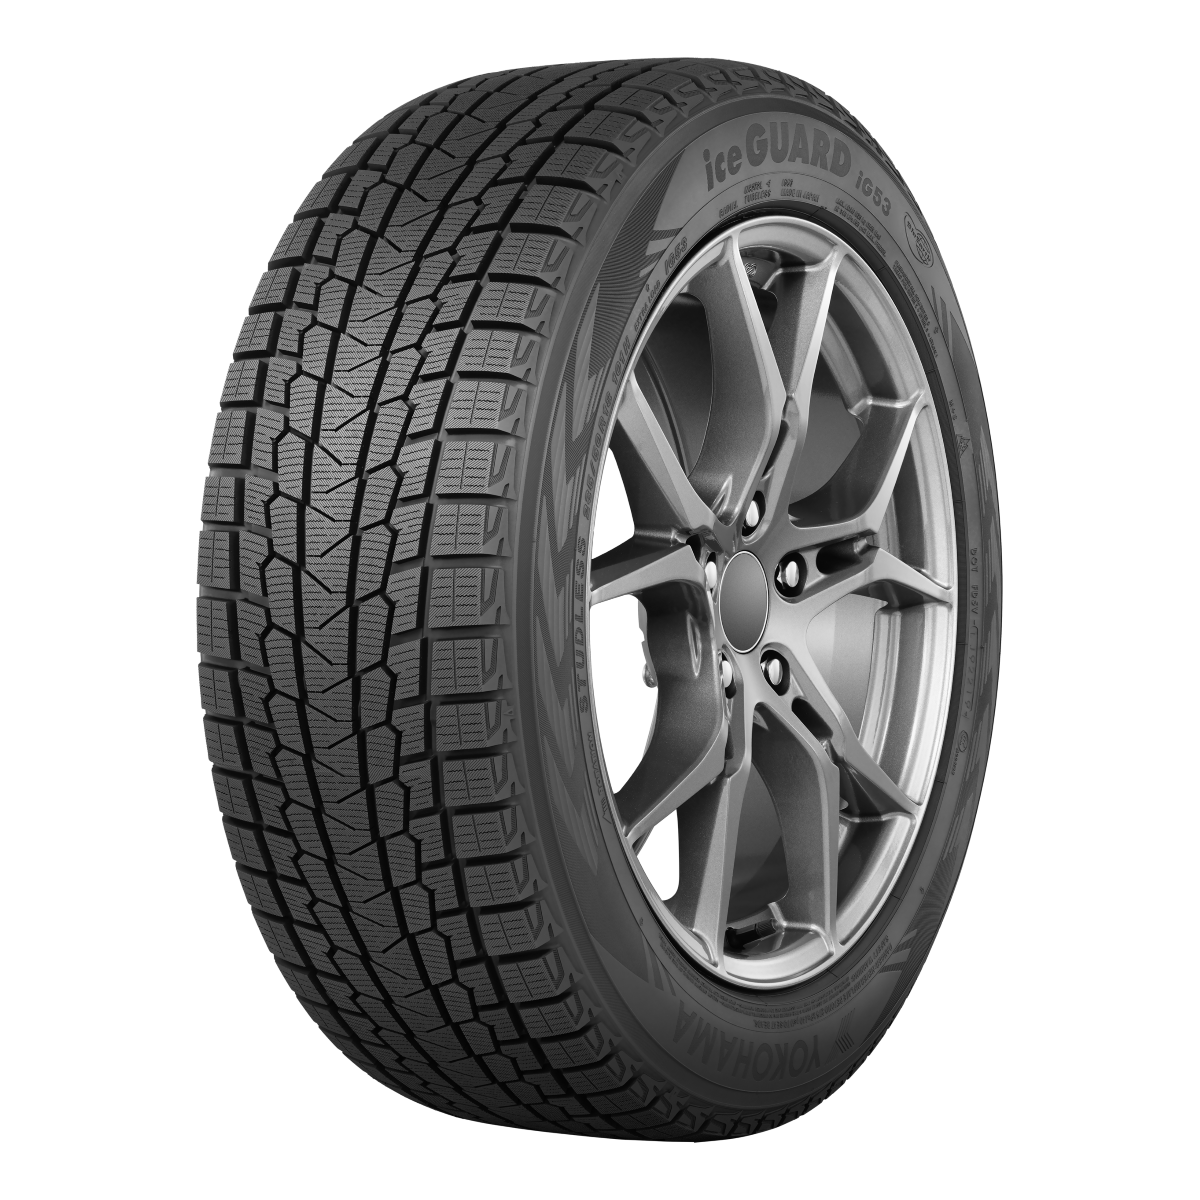 Yokohama iceGUARD iG53 | Winter Tire - Mazda Shop | Genuine Mazda Parts and  Accessories Online